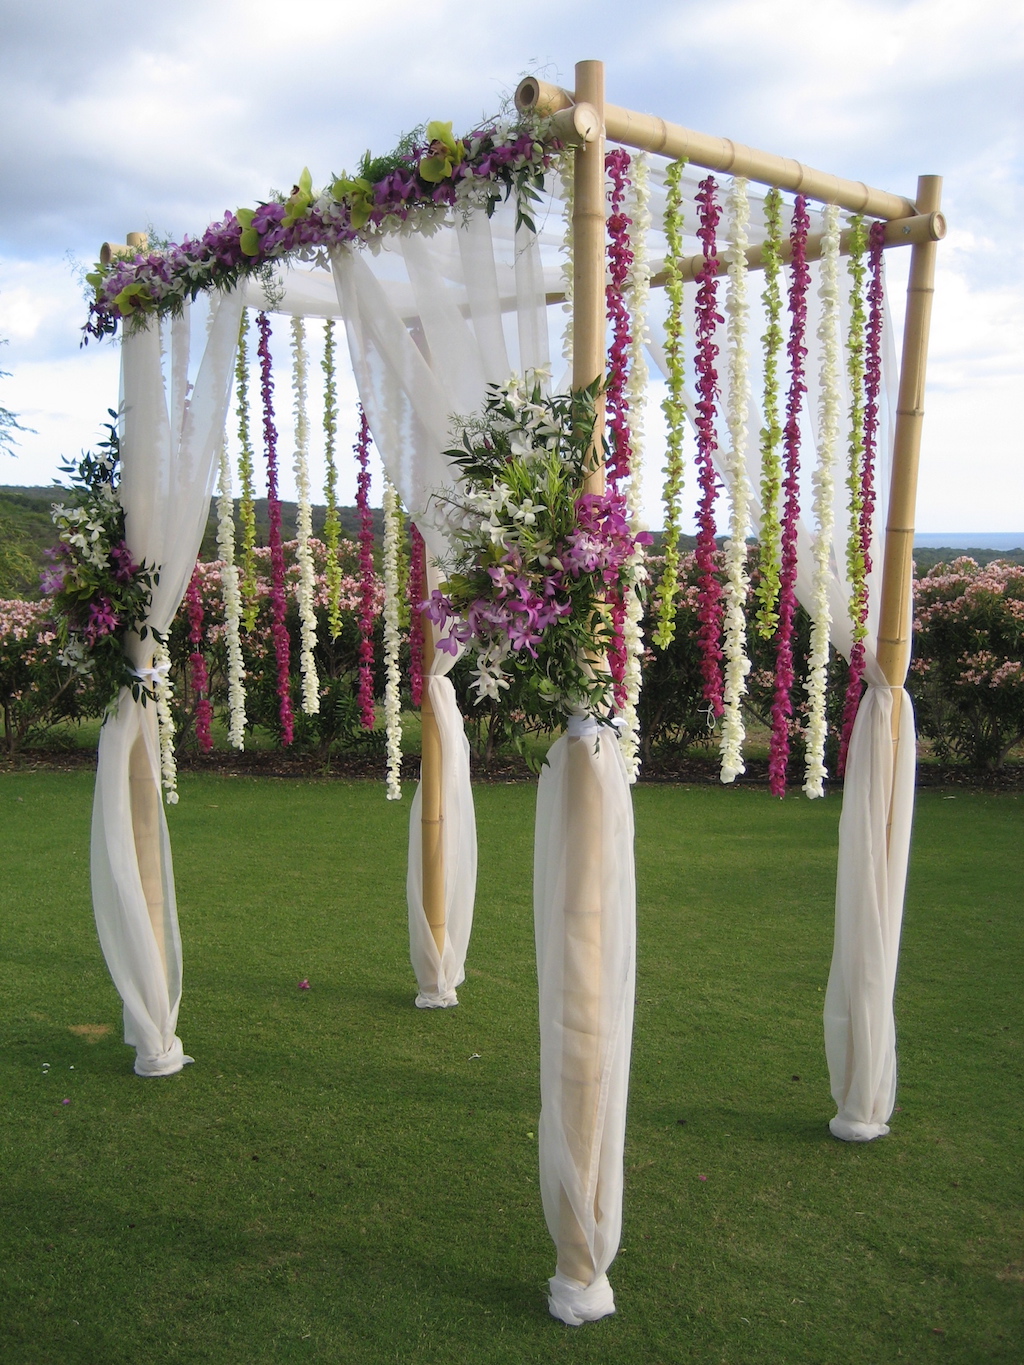 35 Outdoor Wedding Decoration Ideas